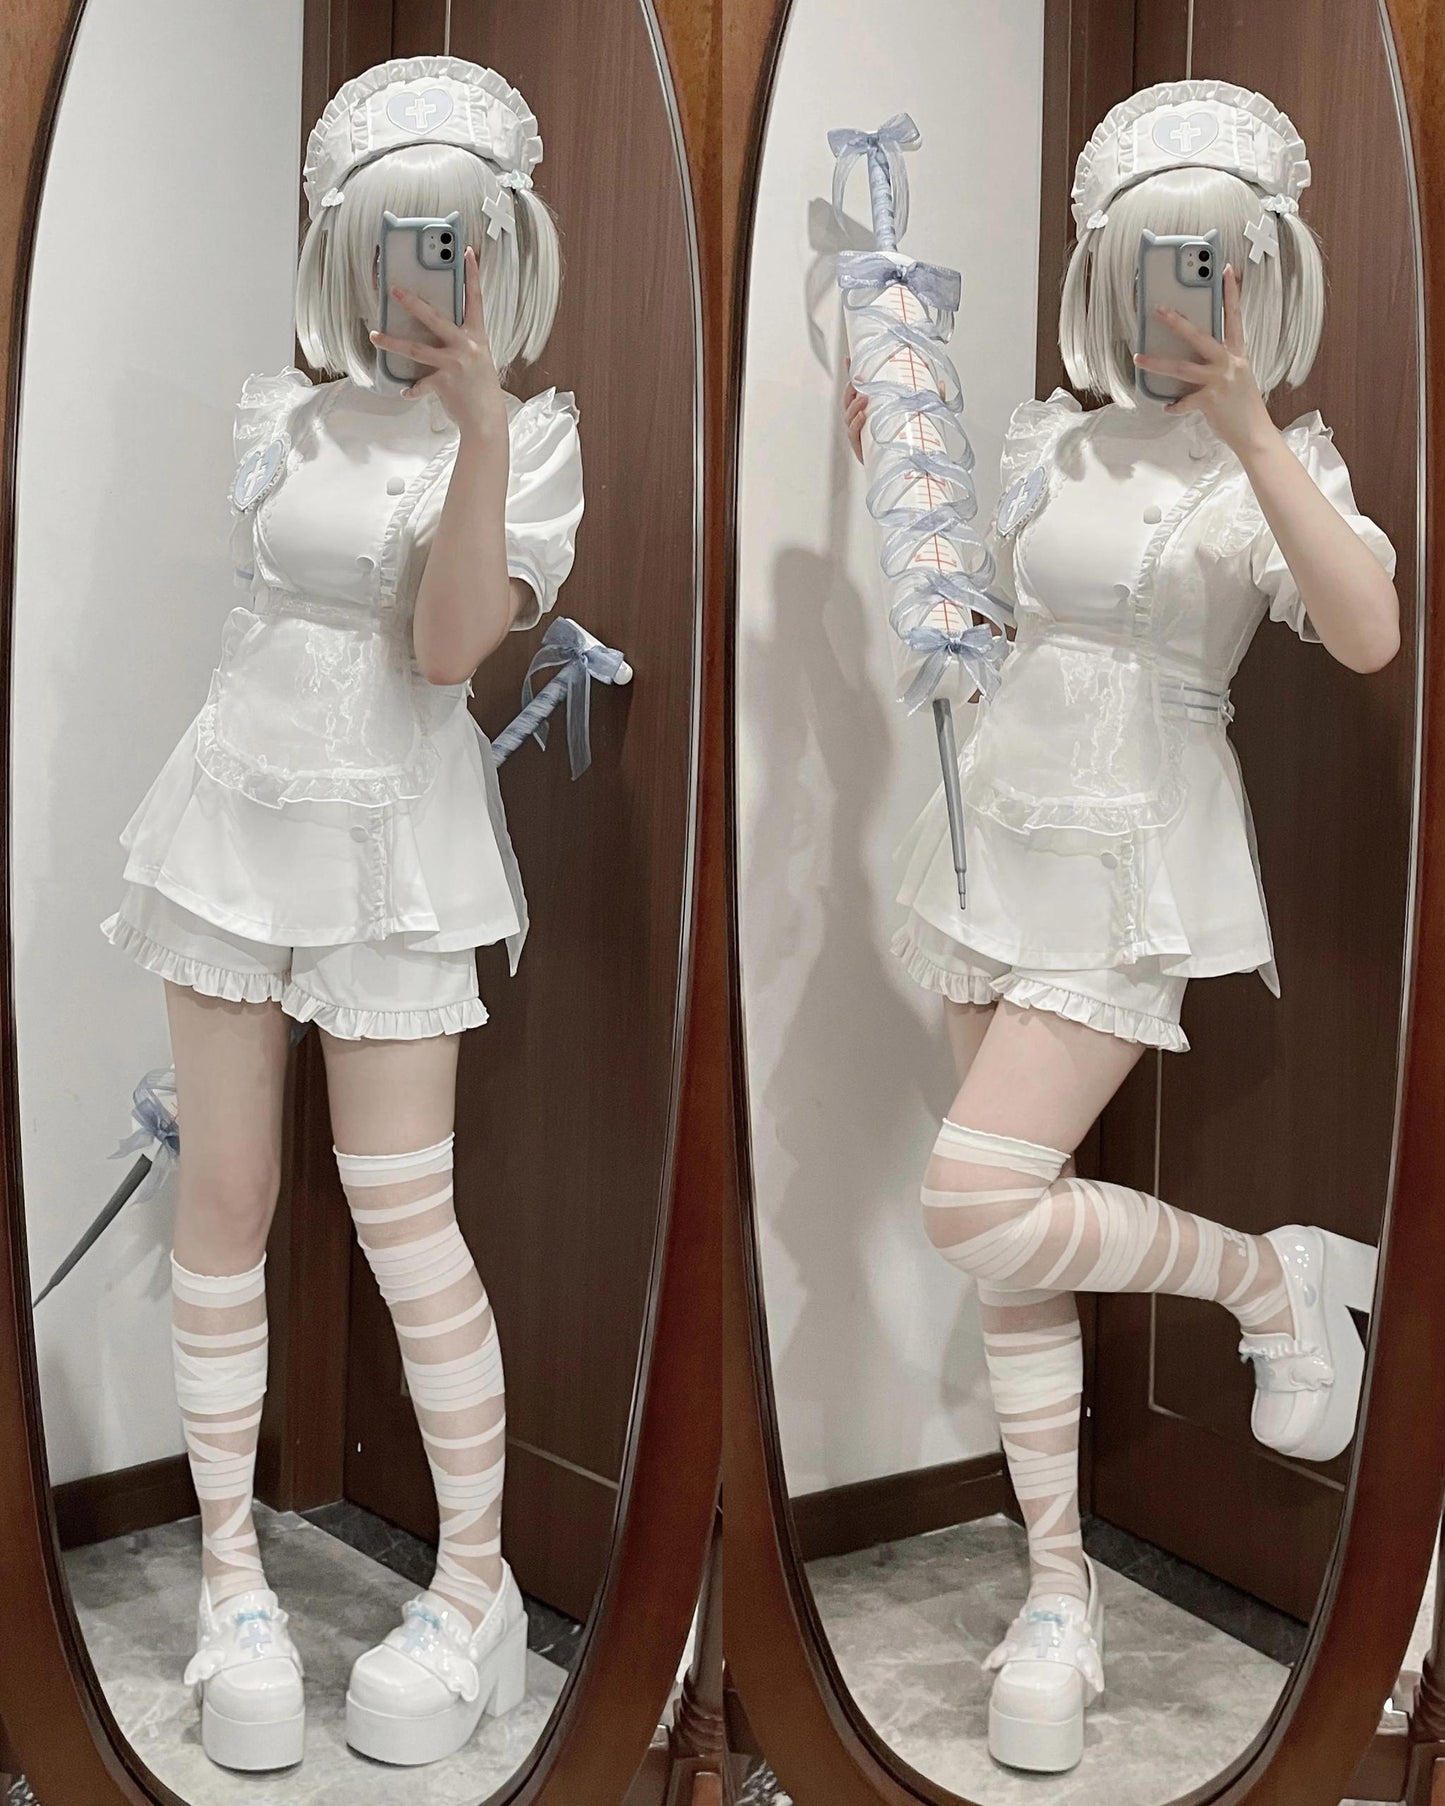 Tenshi Kaiwai Dress Set Nurse Medical Series Outfit Sets 37460:560304